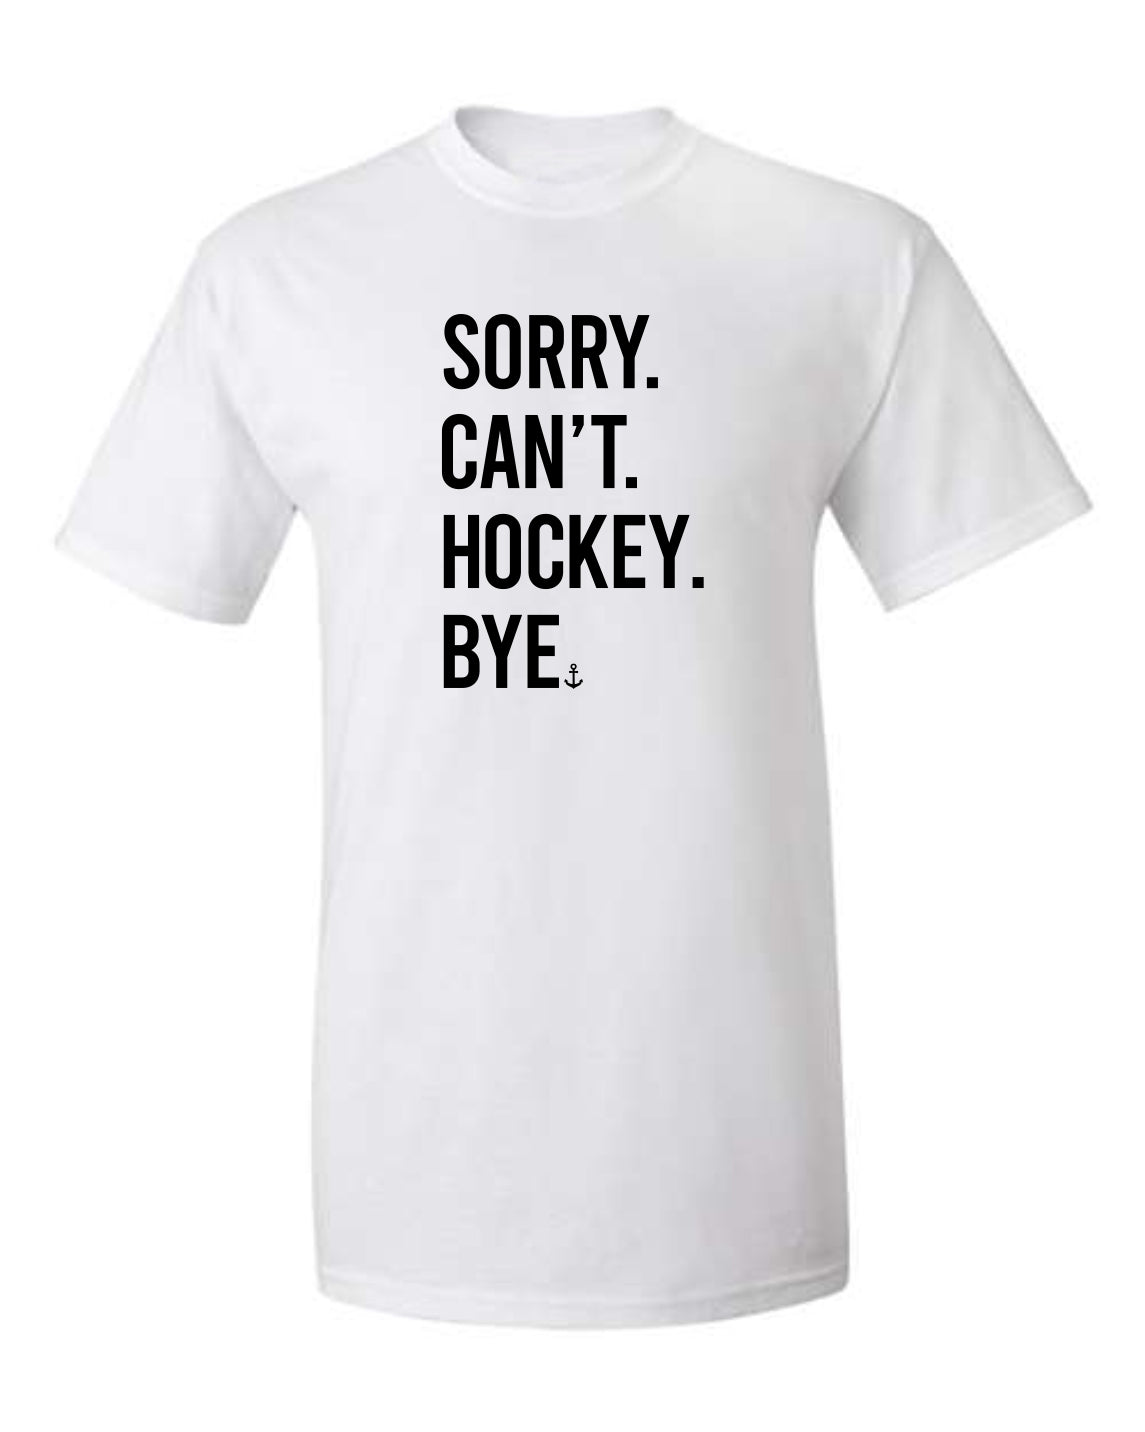 "Sorry. Can't. Hockey. Bye." T-Shirt